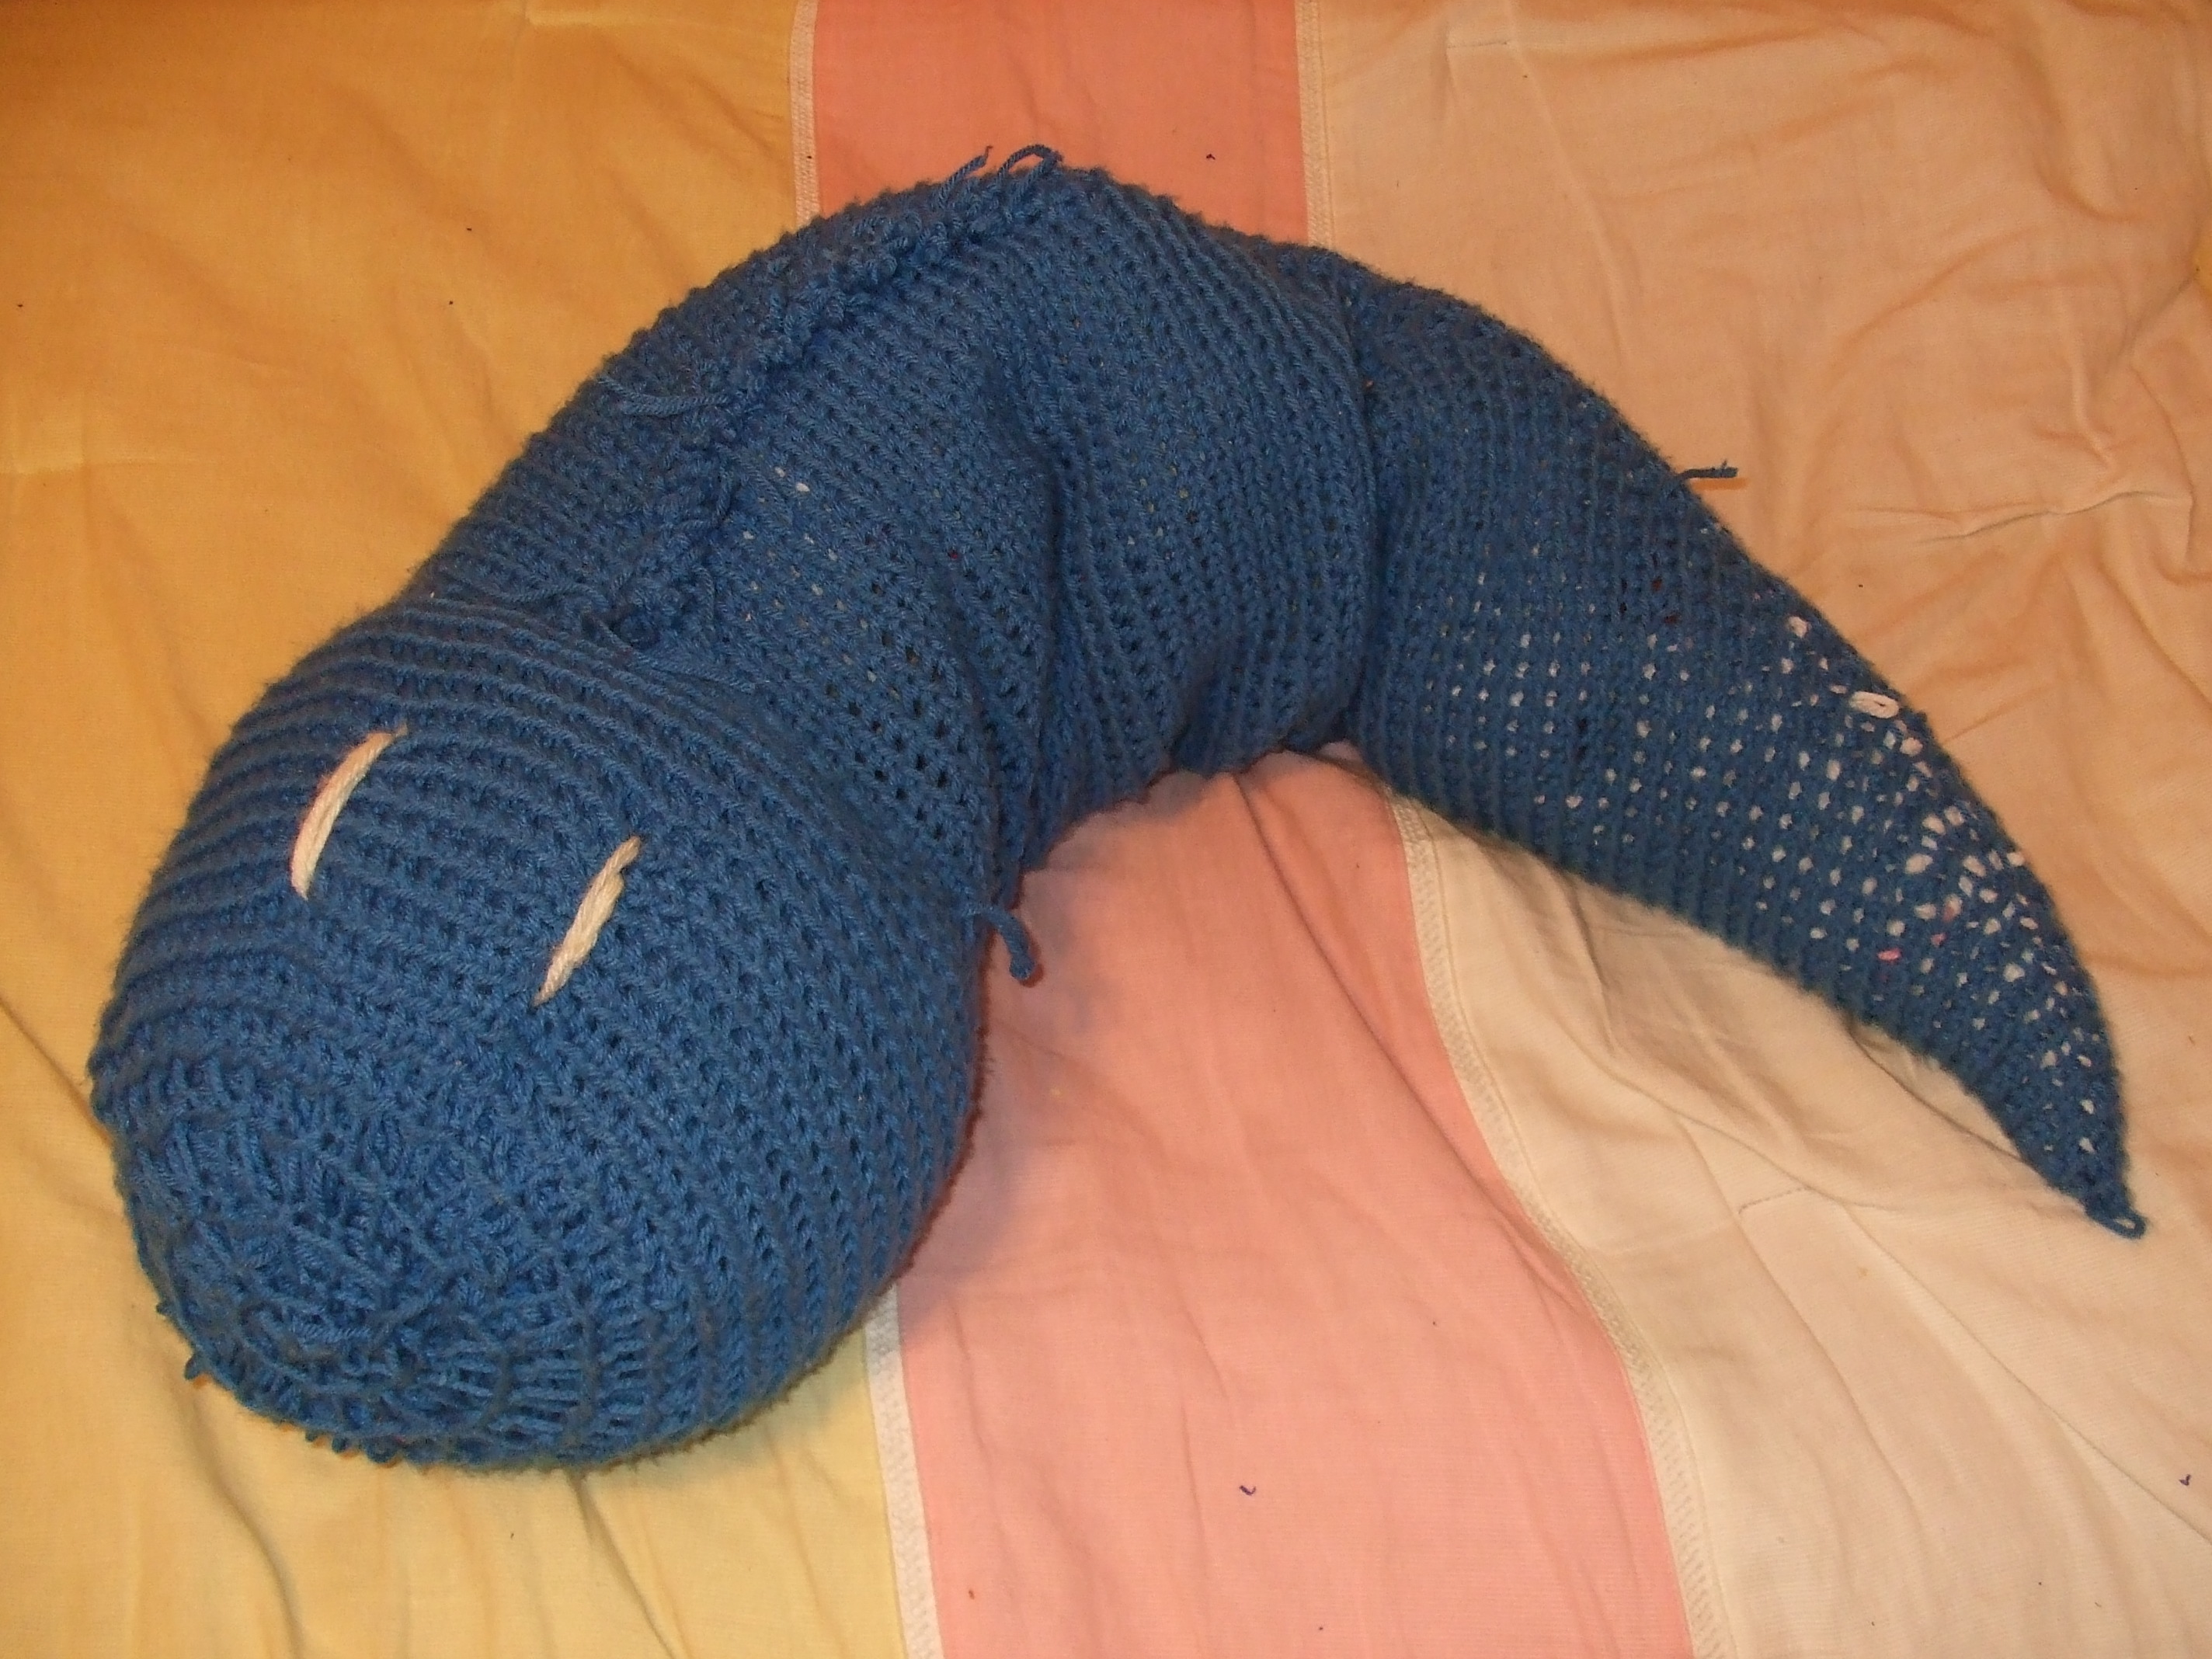 My Pillow Dragon by CharonTheSabercat